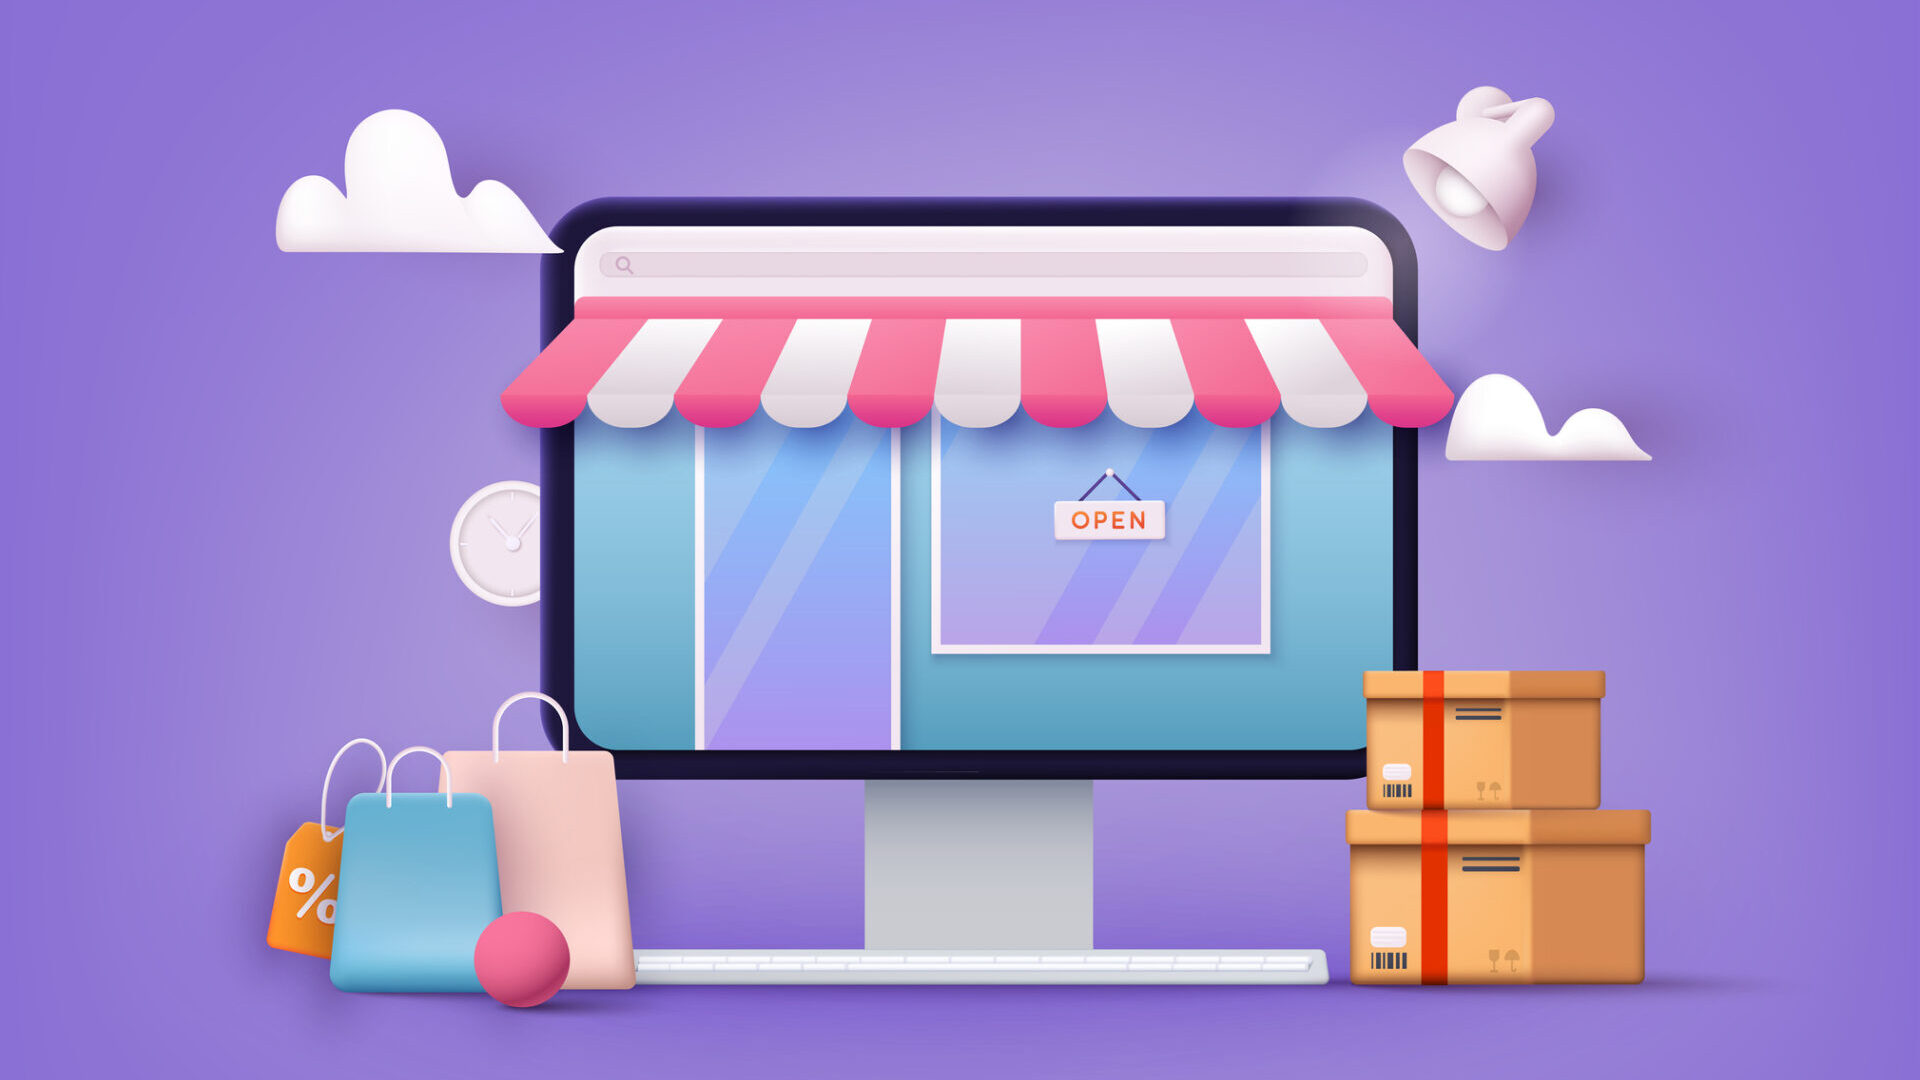 Online shopping.Design graphic elements, signs, symbols. Mobile marketing and digital marketing. 3D Web Vector Illustrations.